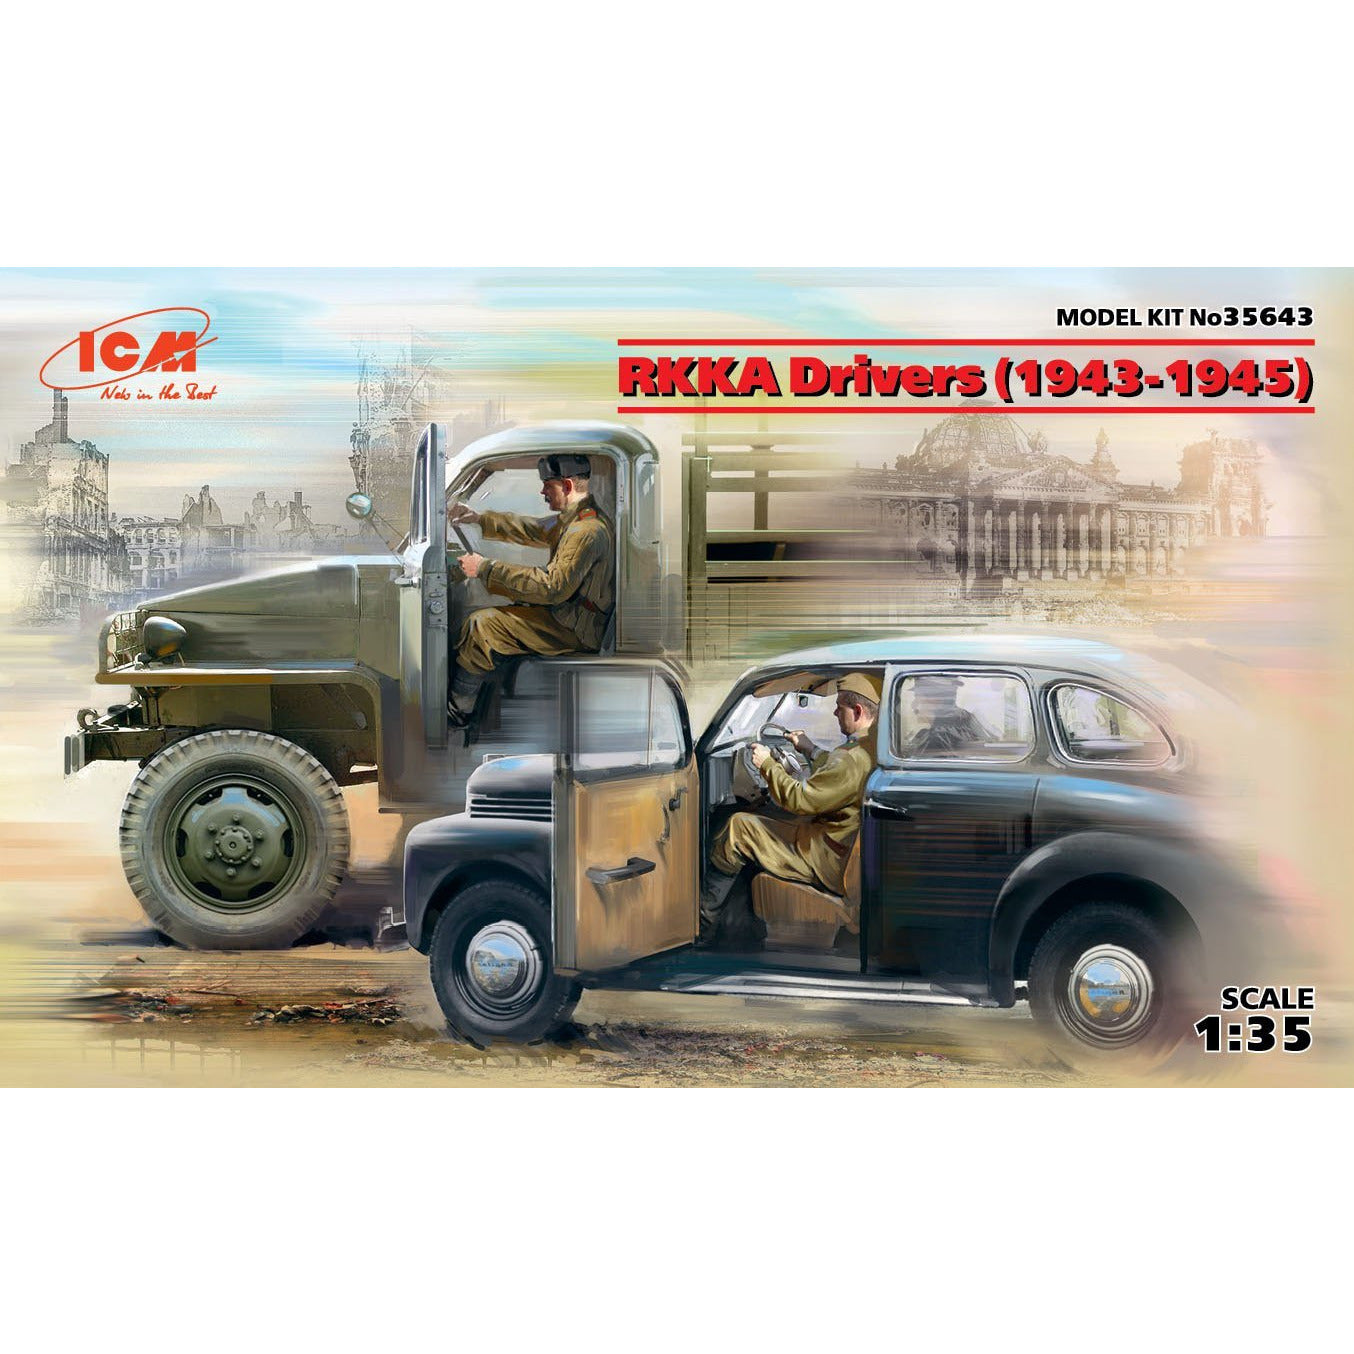 RKKA Drivers (1943-1945) 1/35 by ICM